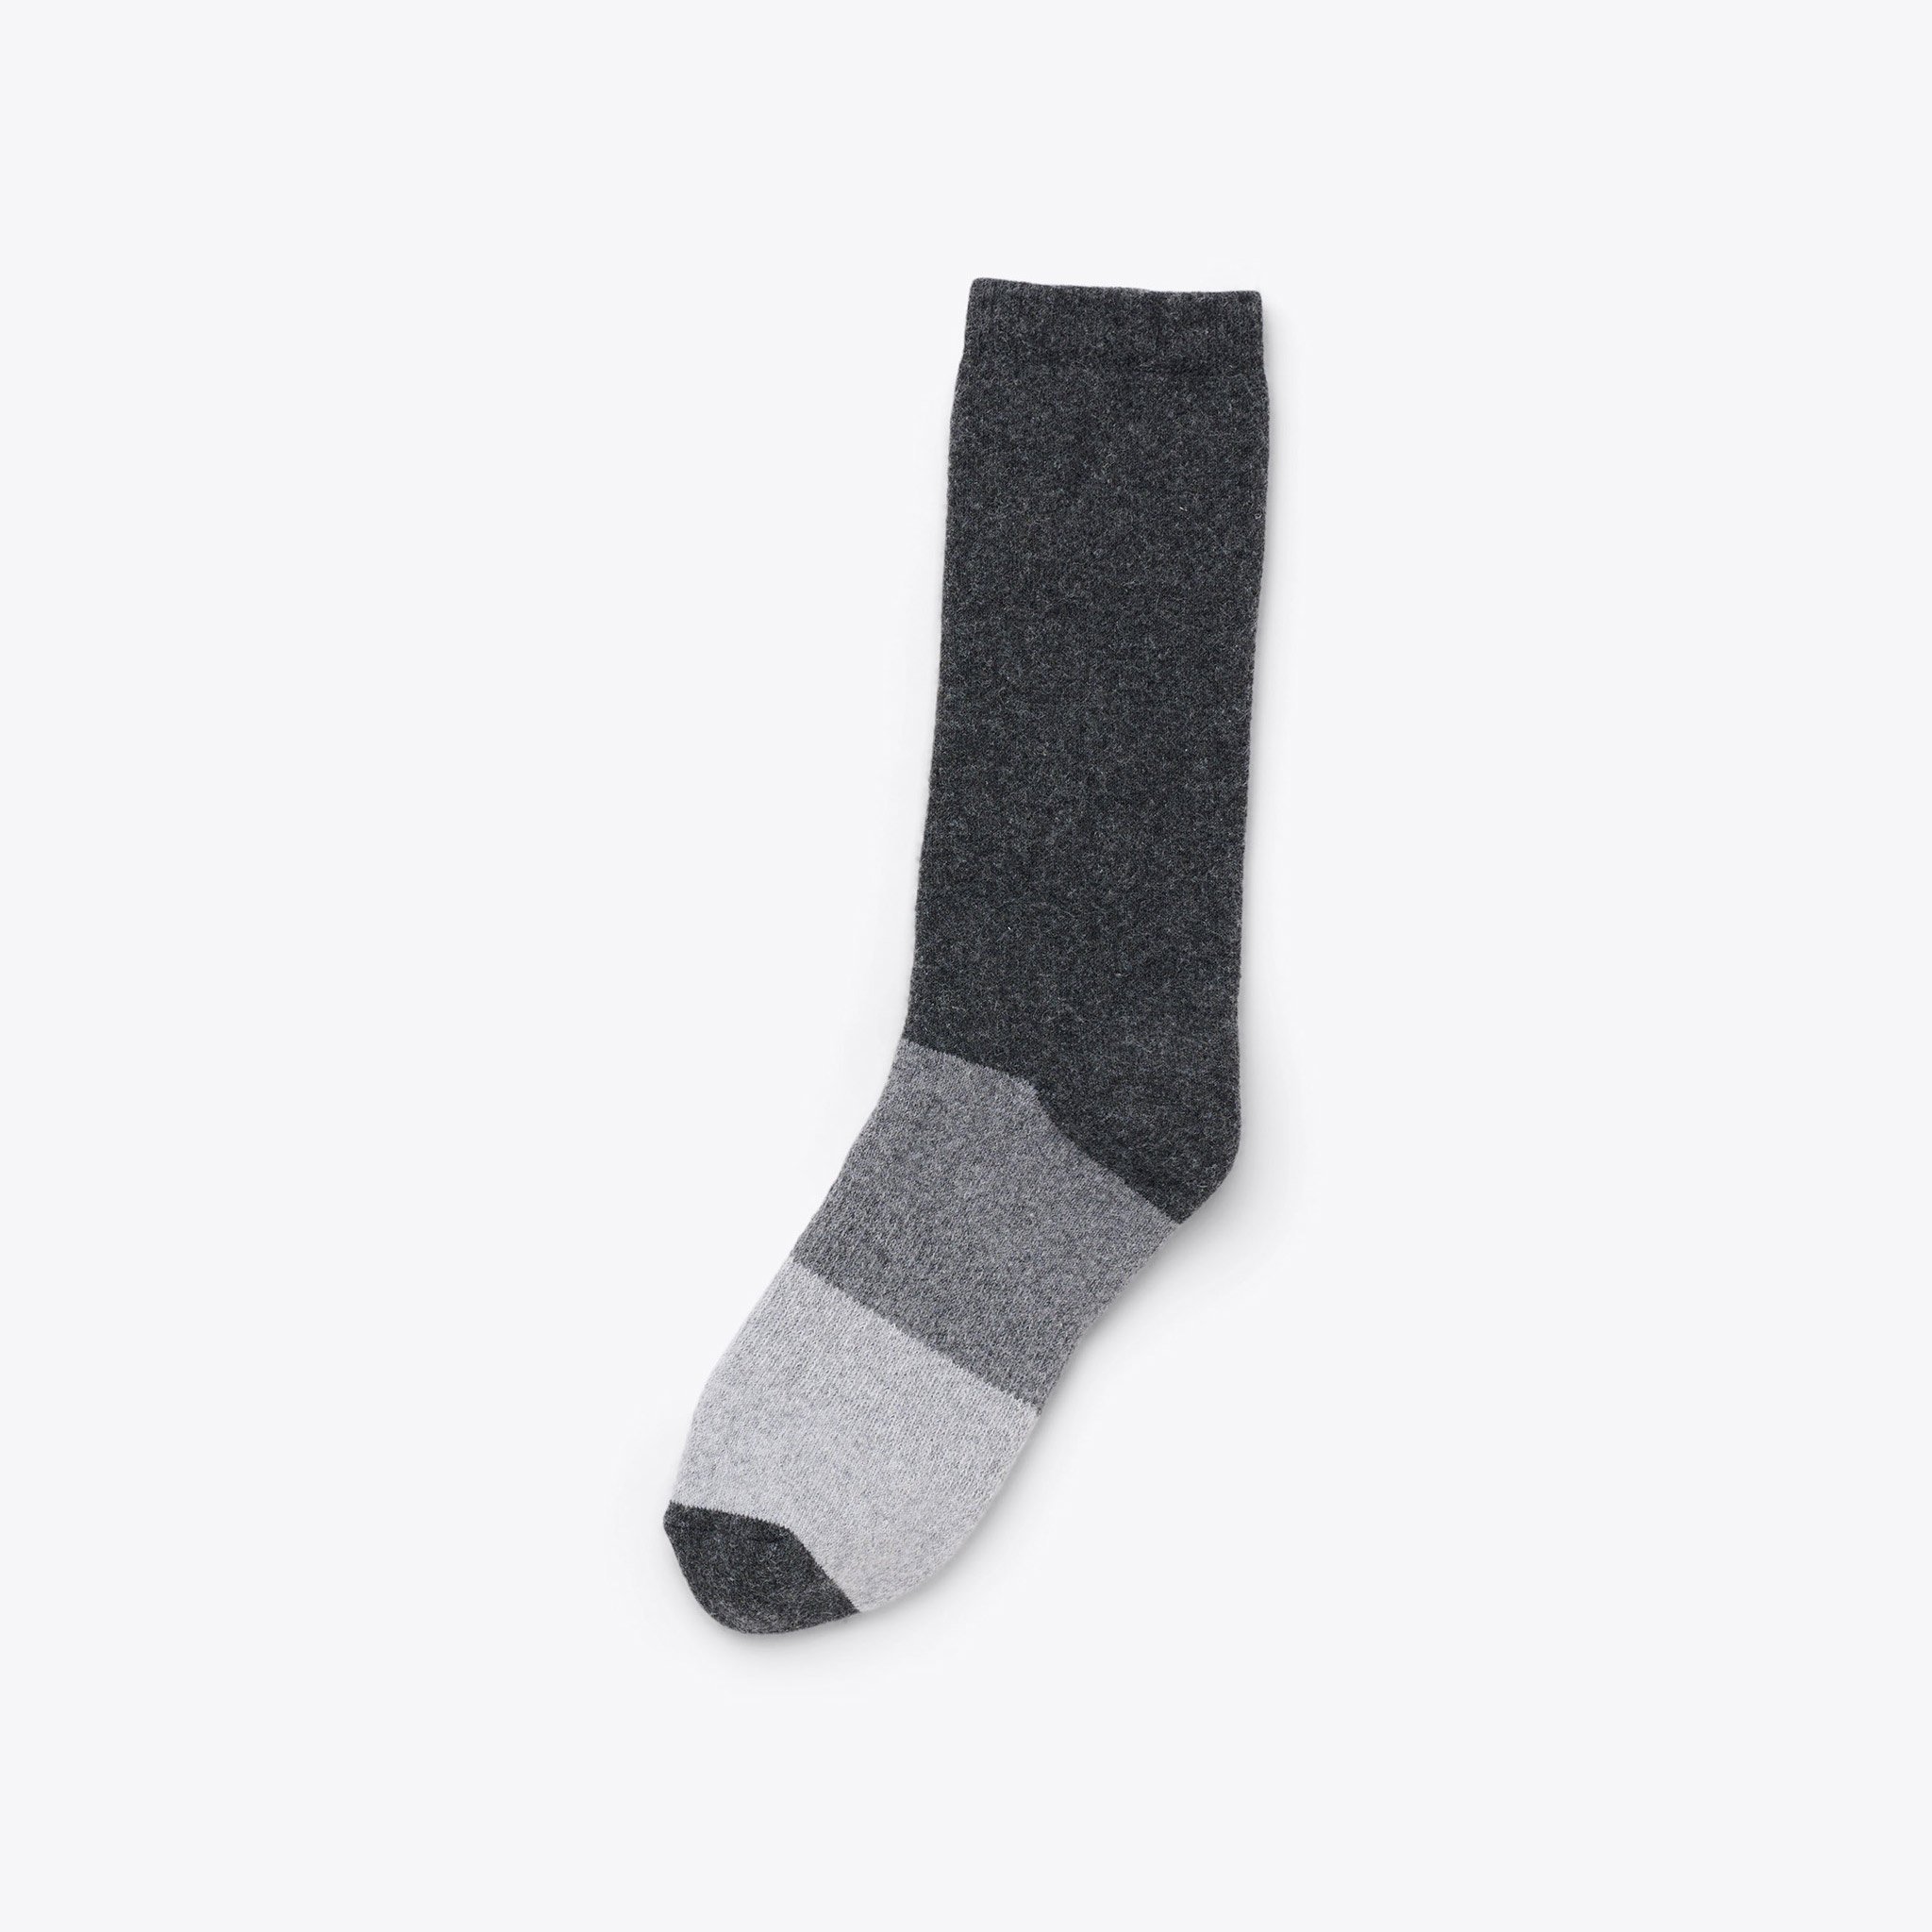 Nisolo Wool Cushion Crew Hiker Sock Charcoal Colorblock